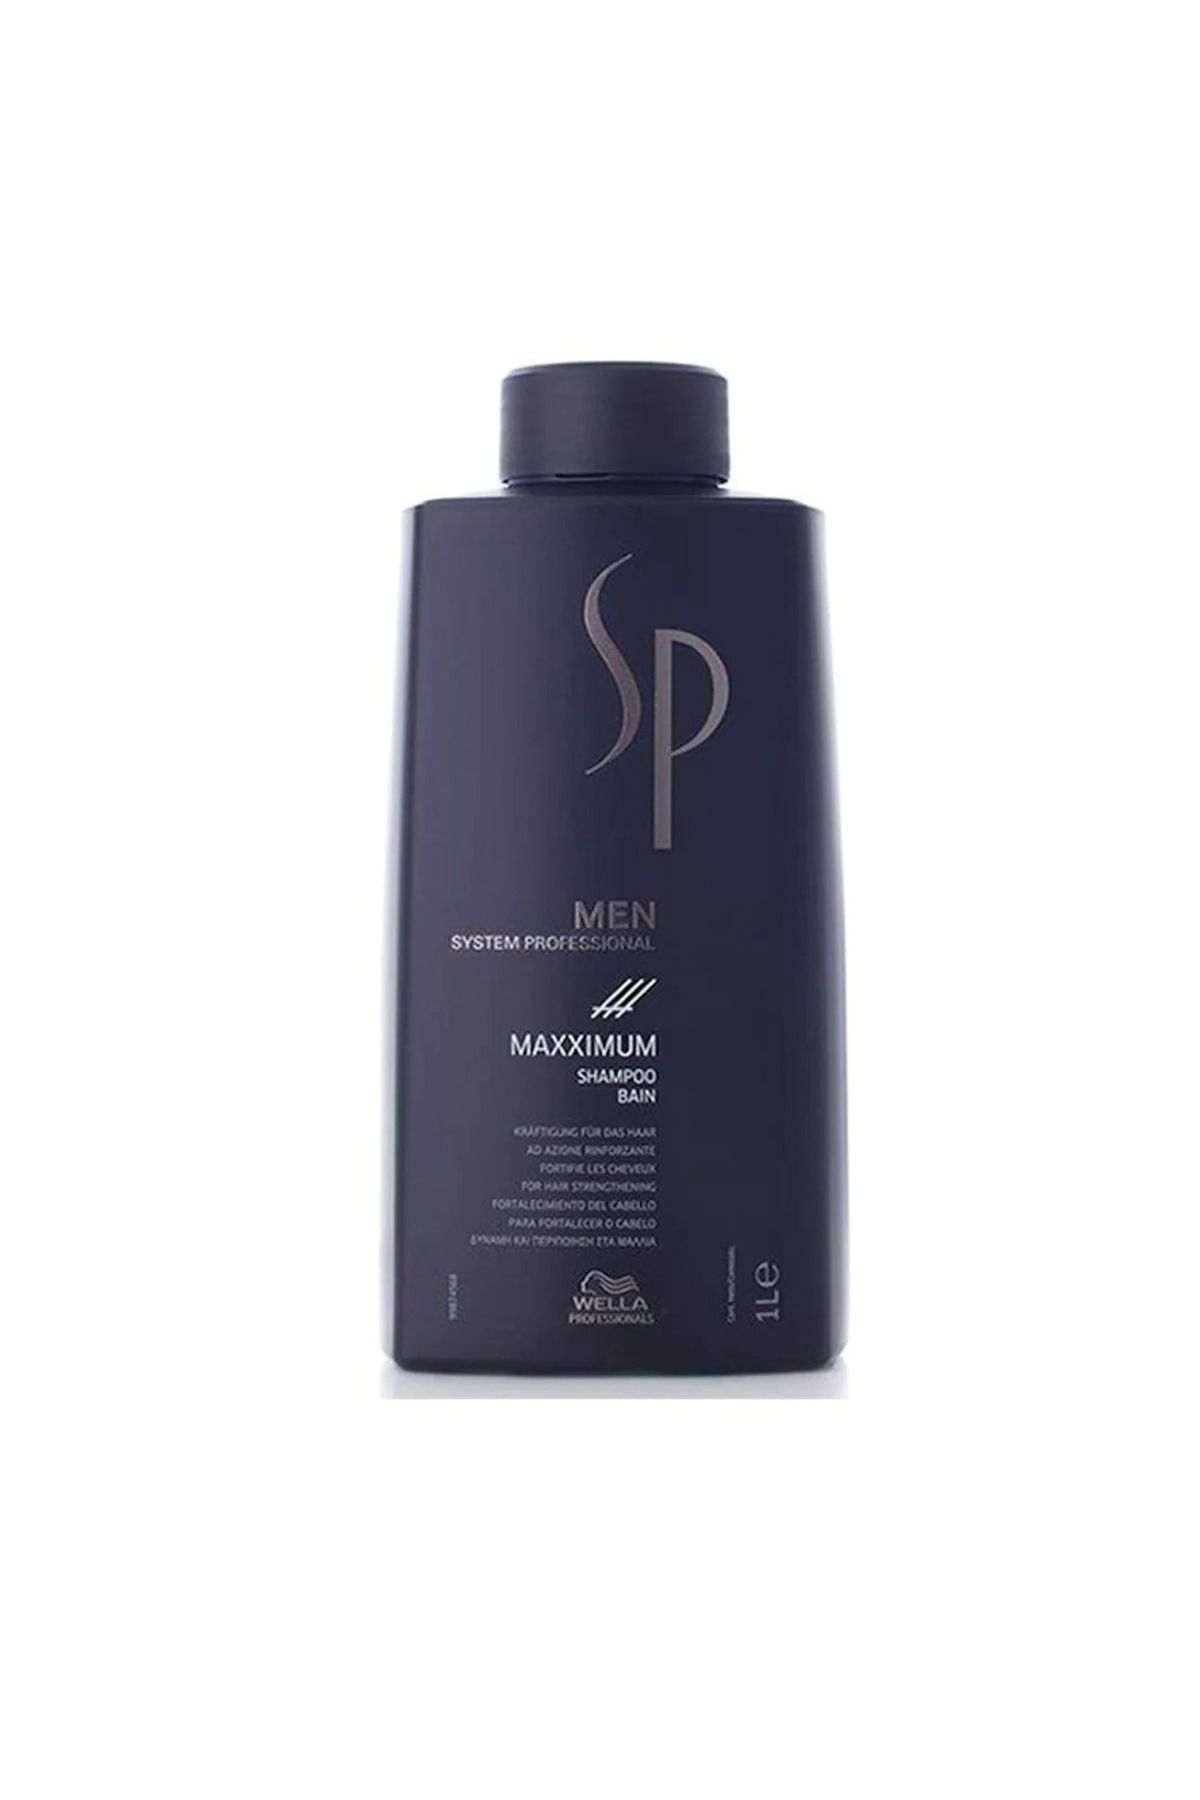 Wella SP Men Maxximum Shampoo for All Hair Types-DökülmeÖnleyici Güçlendirici 1L/GEM5DS5F469990